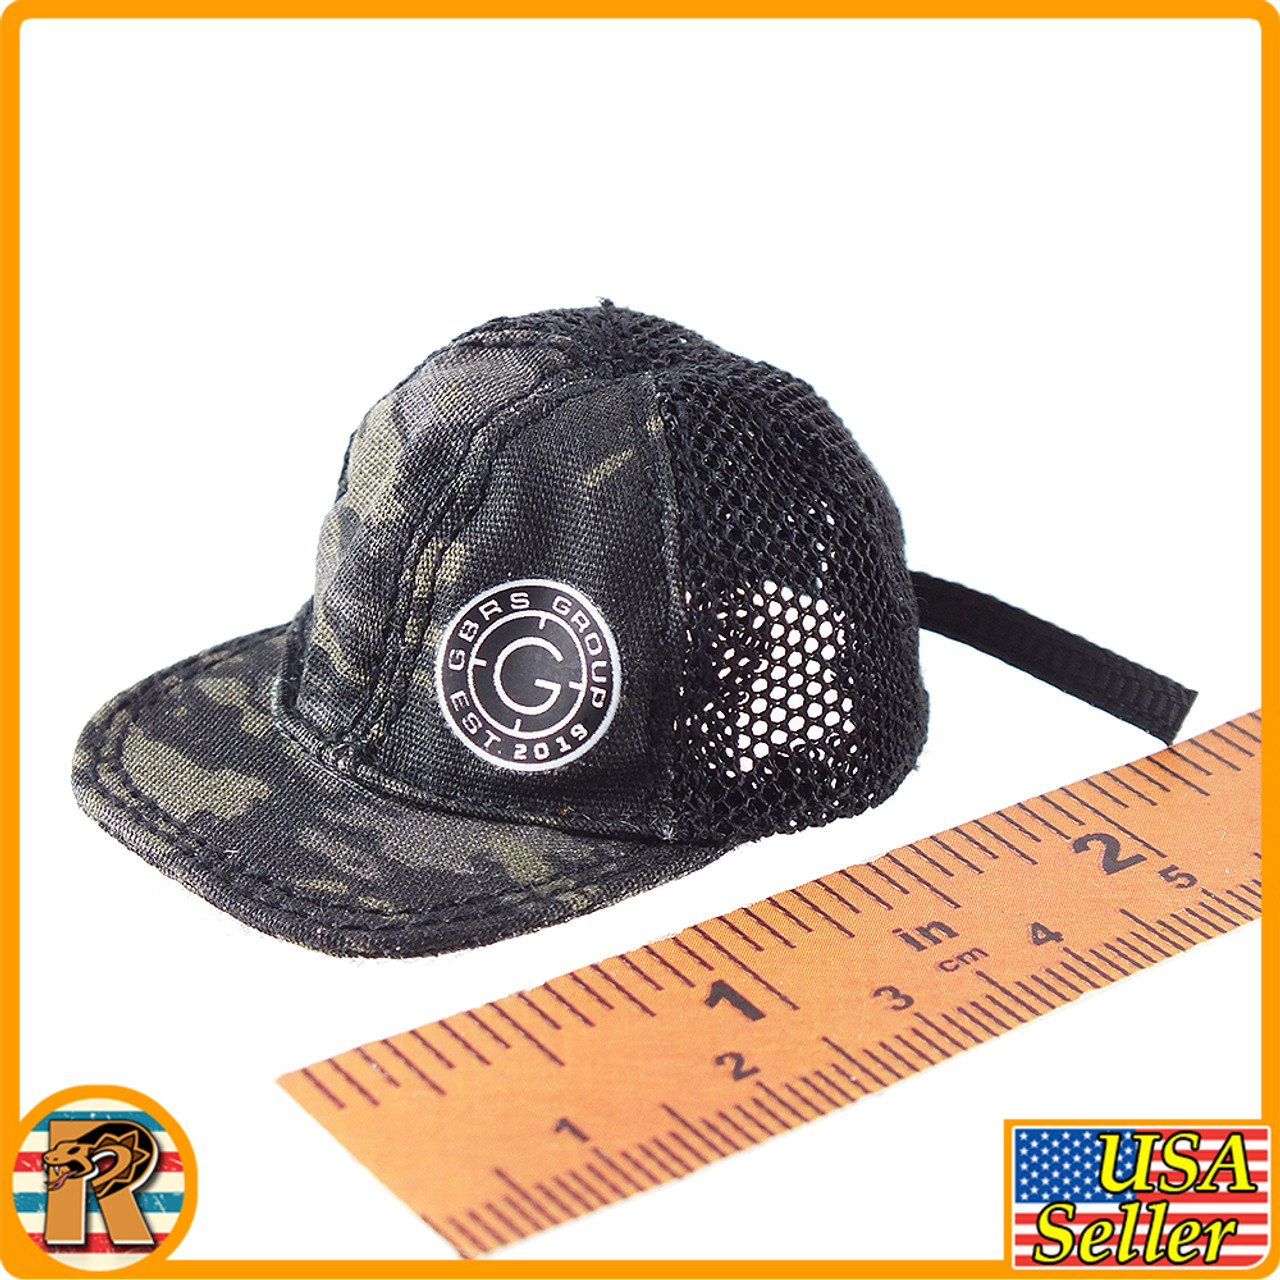 Veteran Tactical Instructor R - Ballcap Hat - 1/6 Scale -